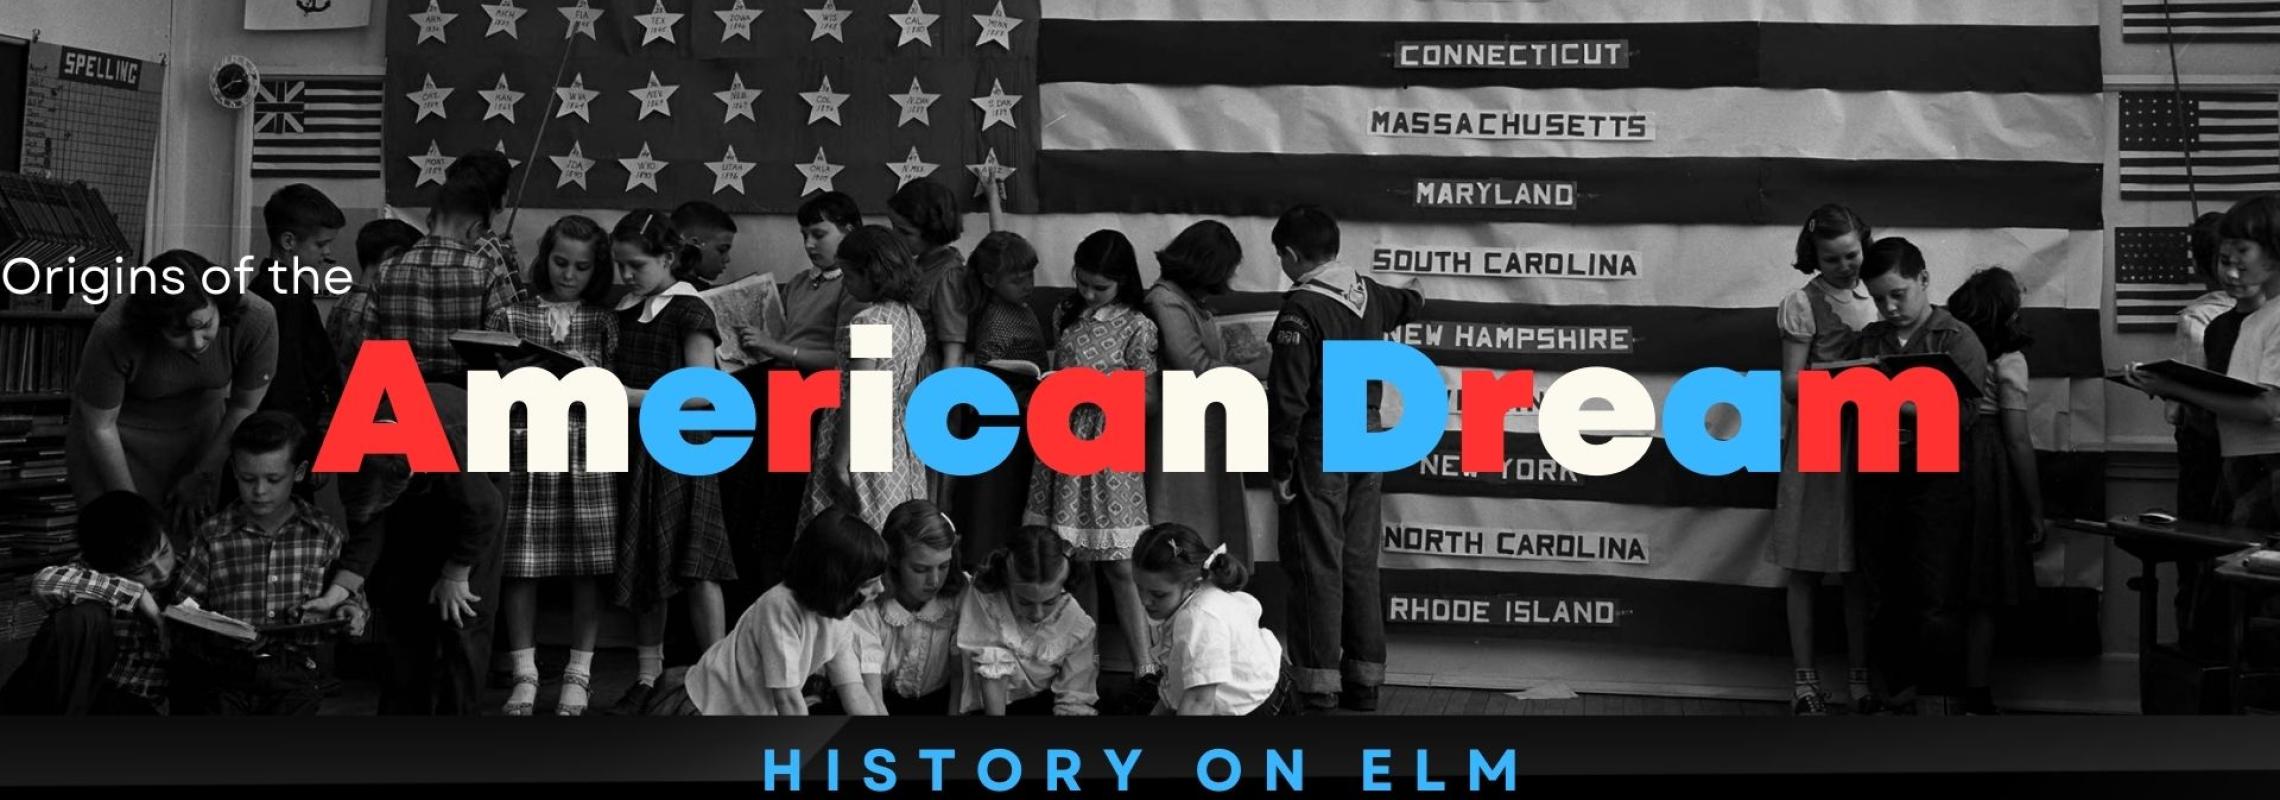 Origins of the American Dream